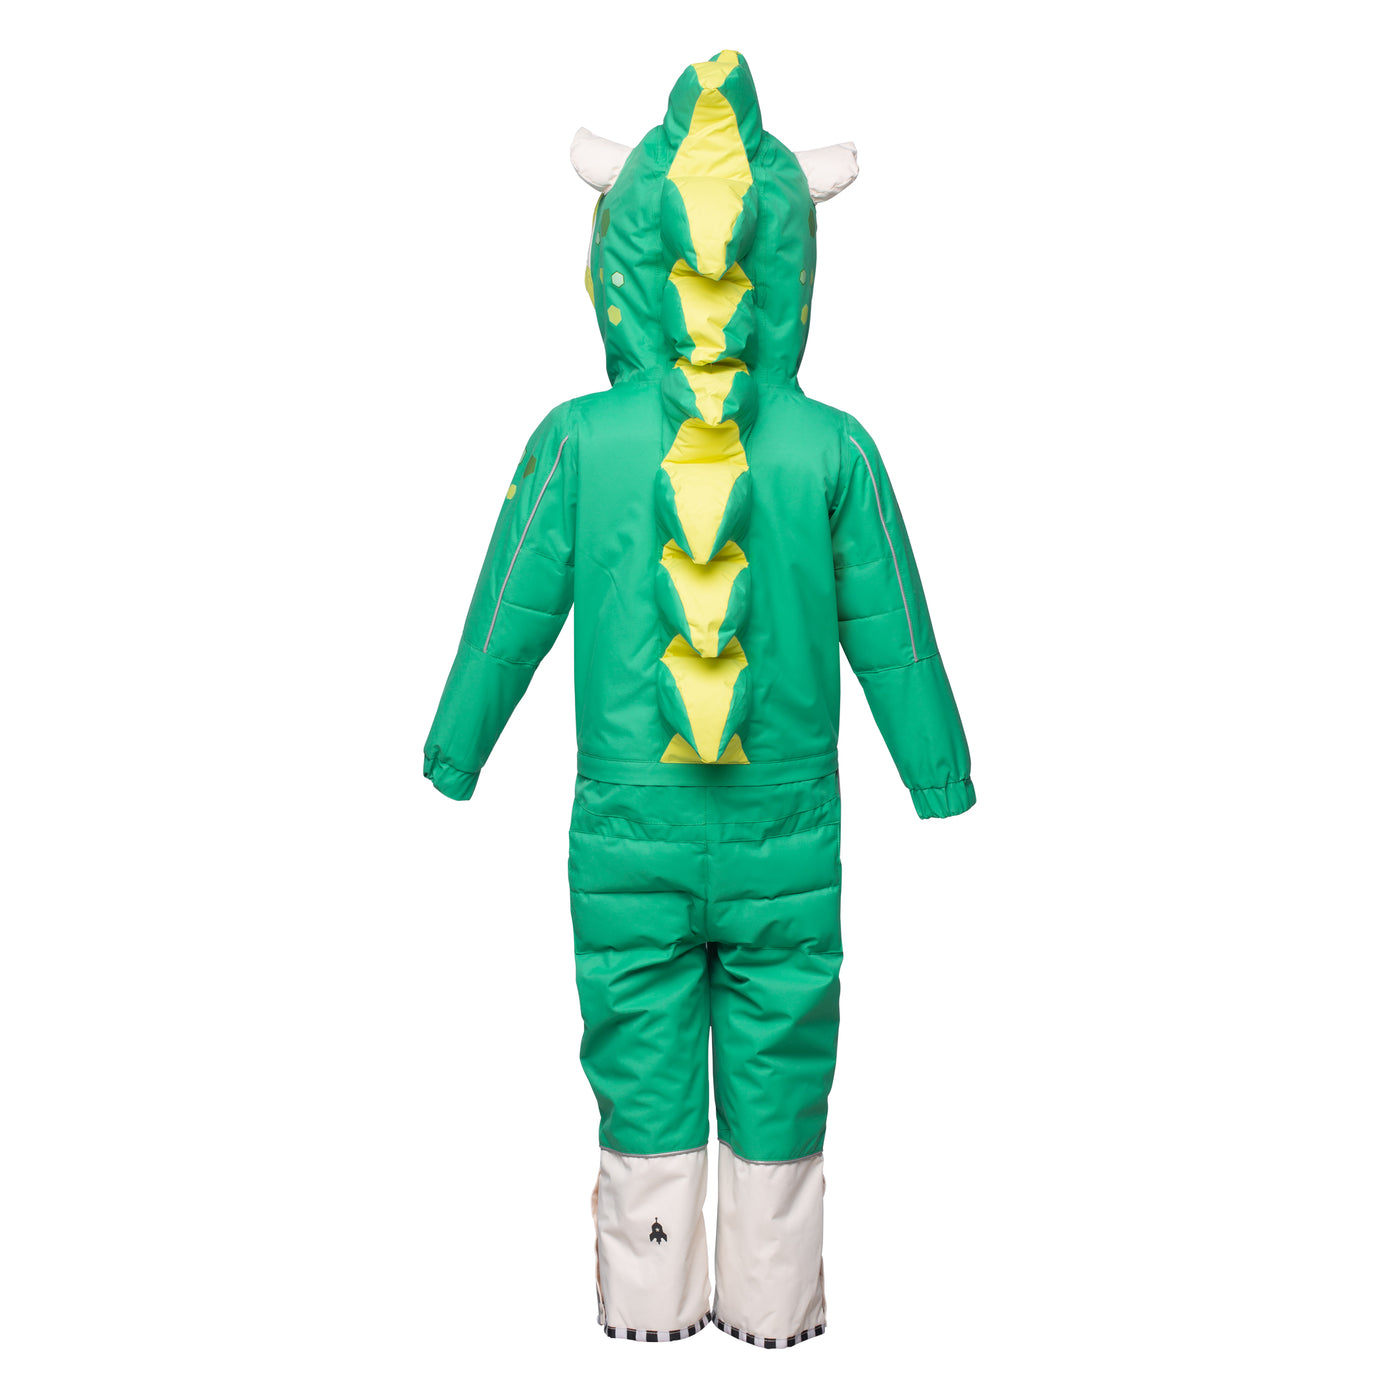 WeeDo Kids Snowsuit Monster Green - LAST SIZE LEFT - SIZE 128-140cm